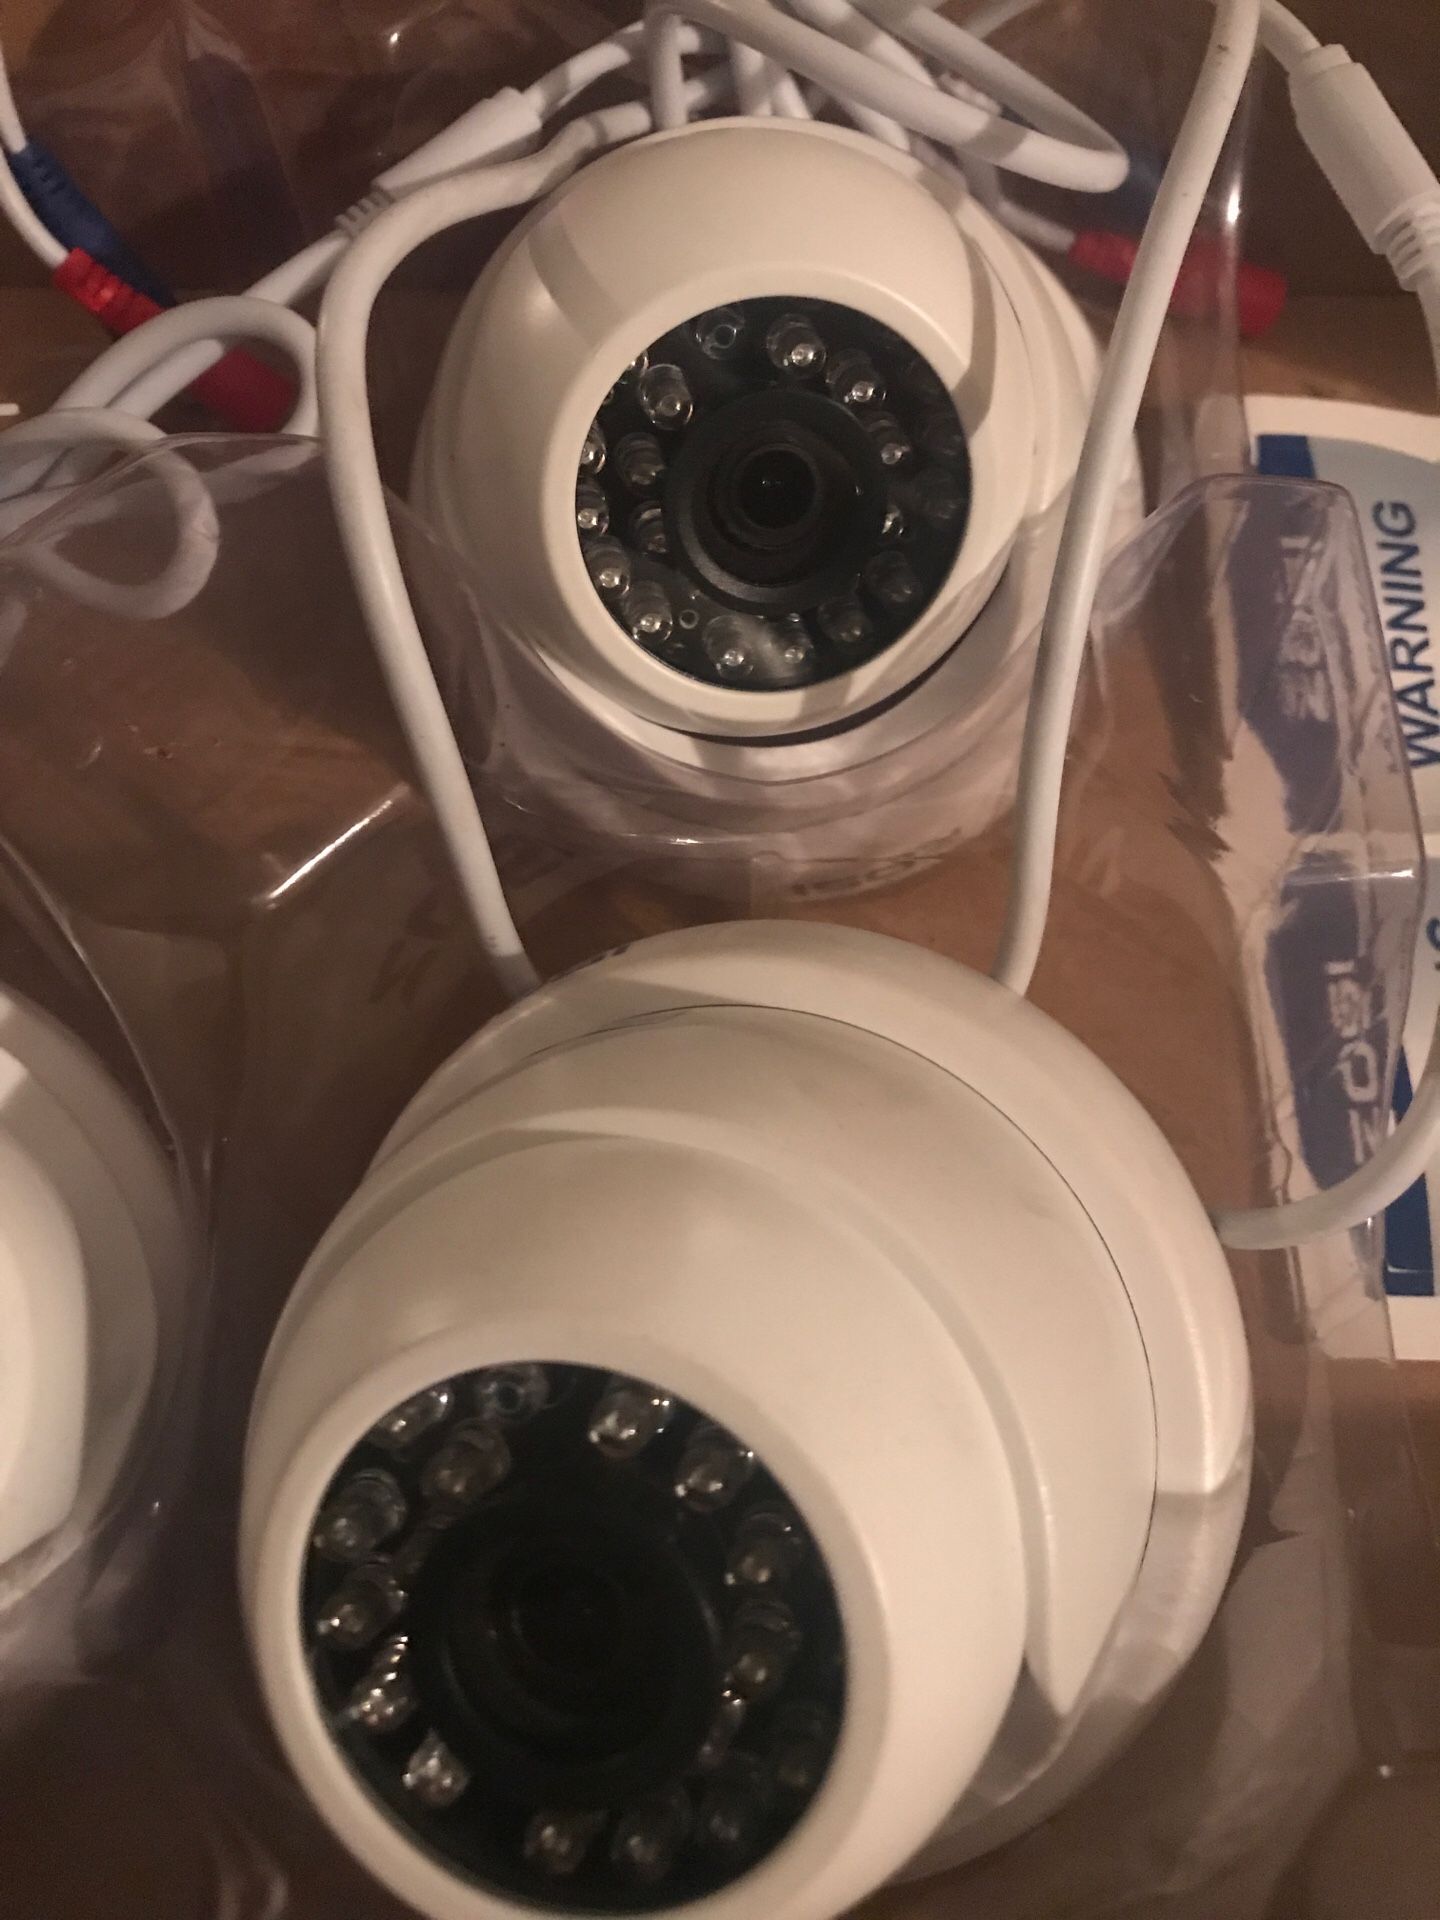 Security cameras kit